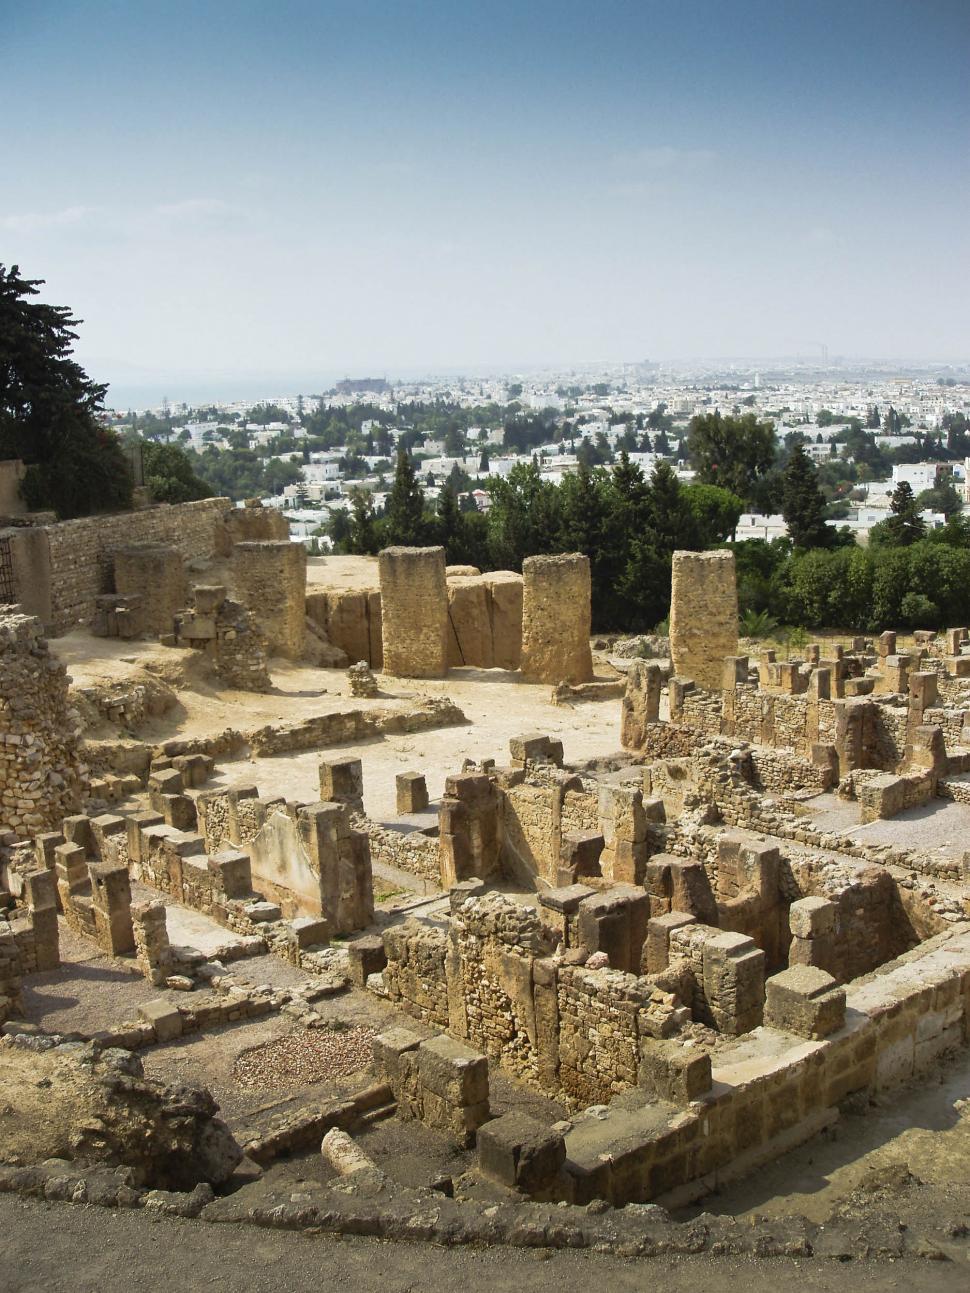 Free Image of Ruins in Tunisia 